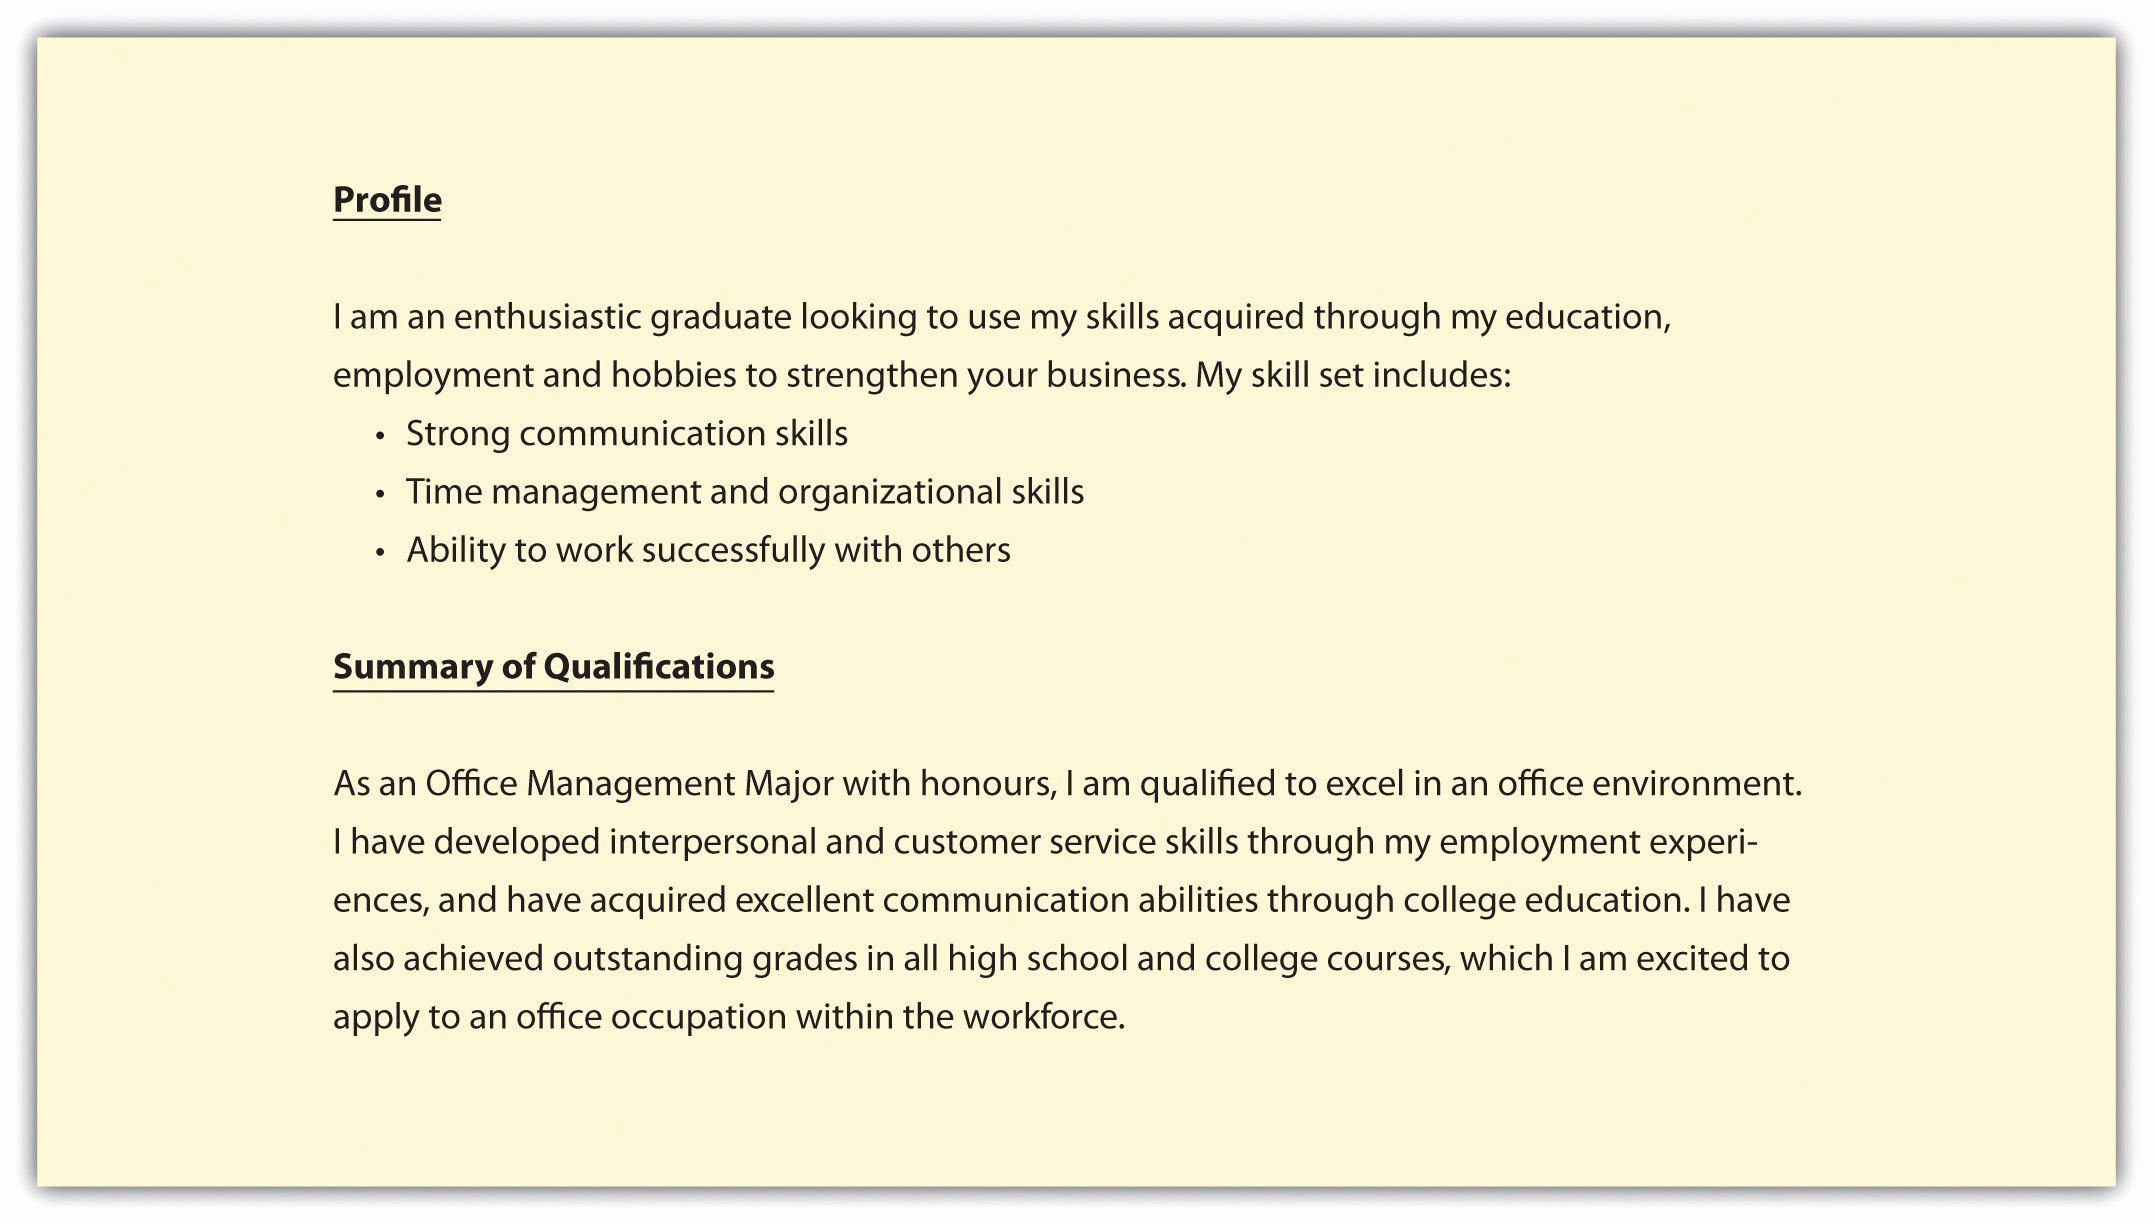 Resume Summary Section Job Sample social Worker